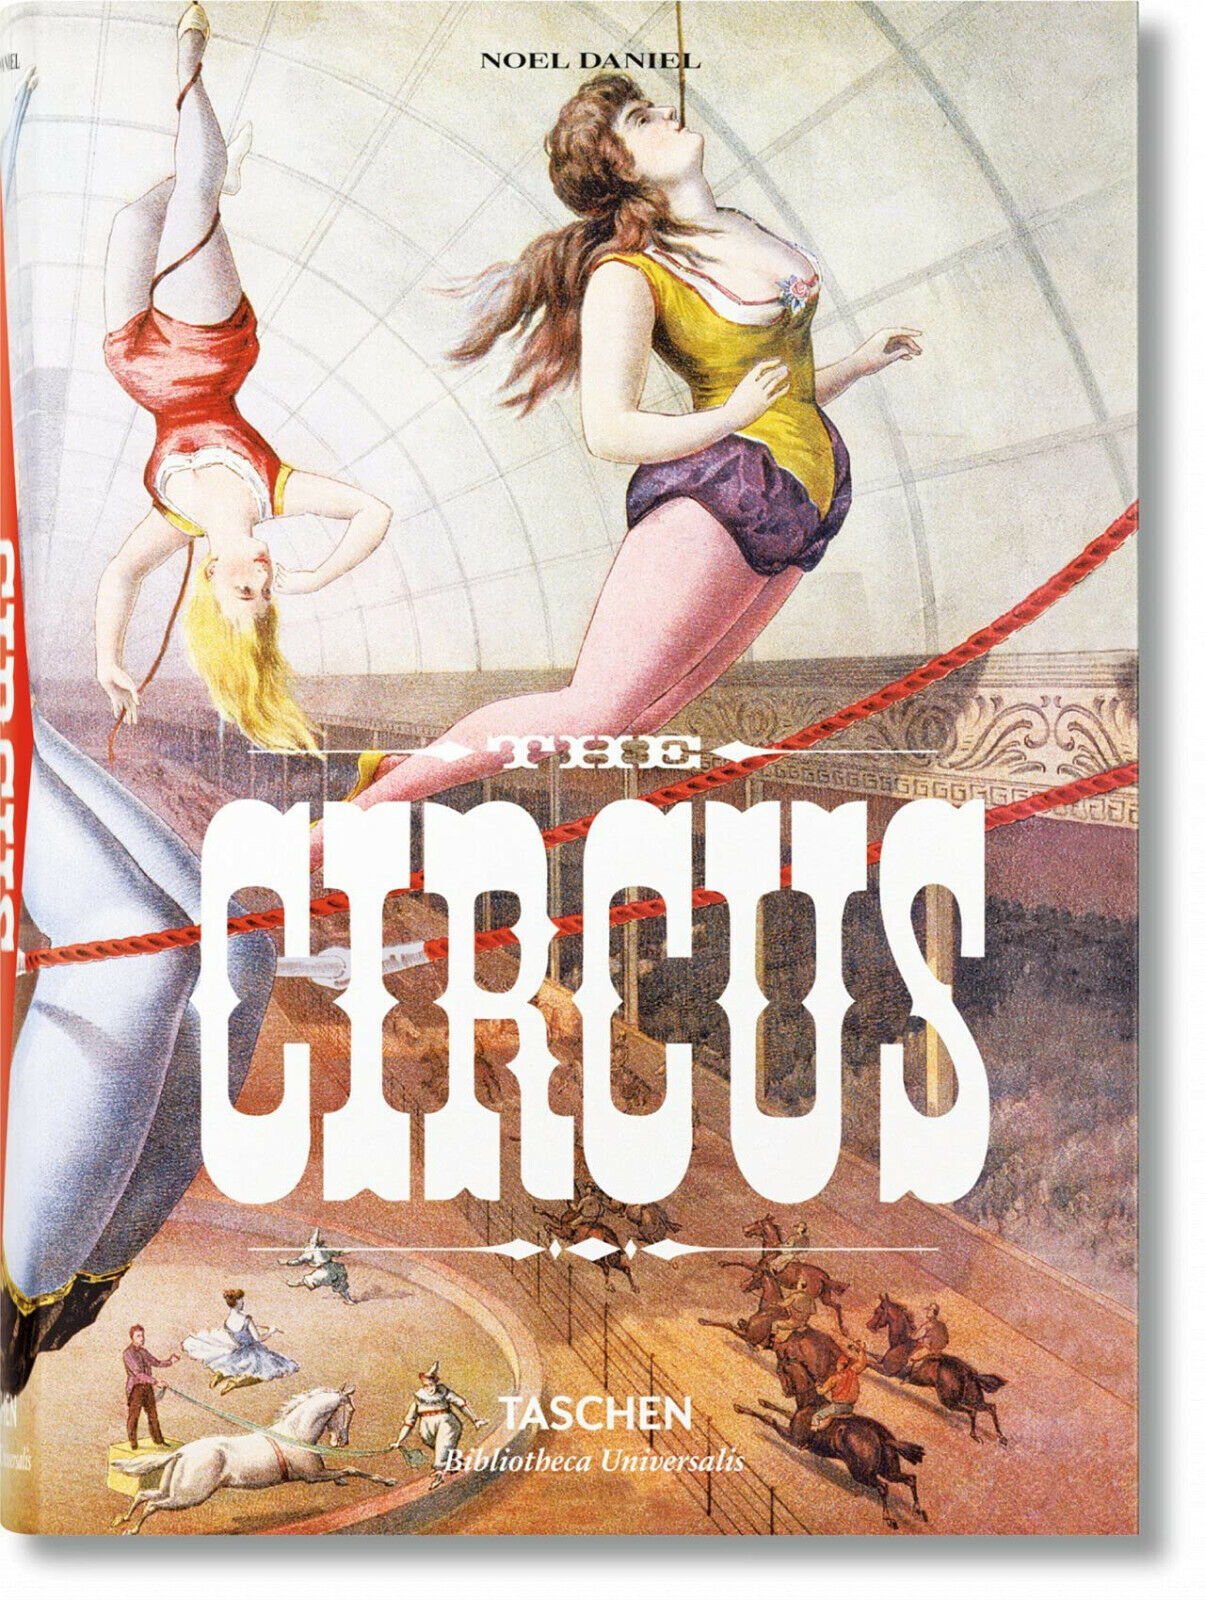 The Circus - Linda Granfield, Fred Dahlinger, Noel Daniel - Taschen, 2016